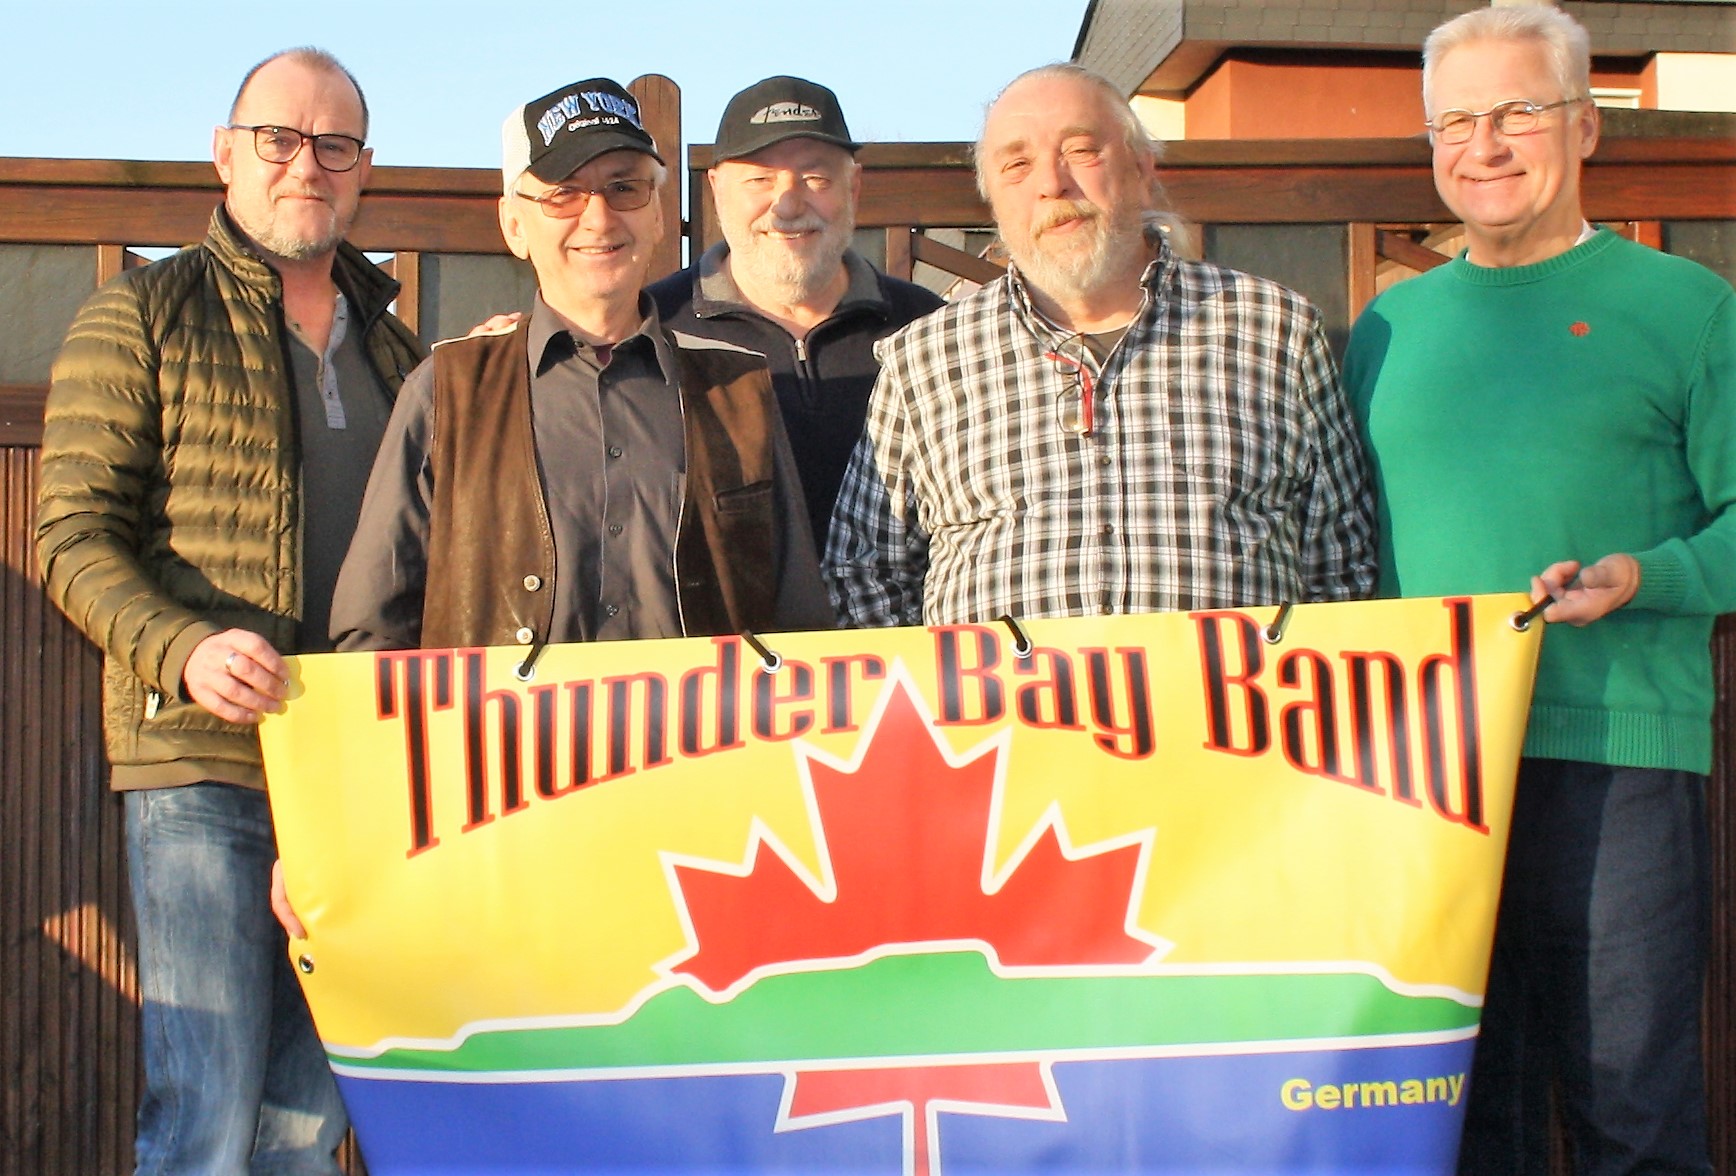 Thunder Bay Band JVA Duisburg-Hamborn